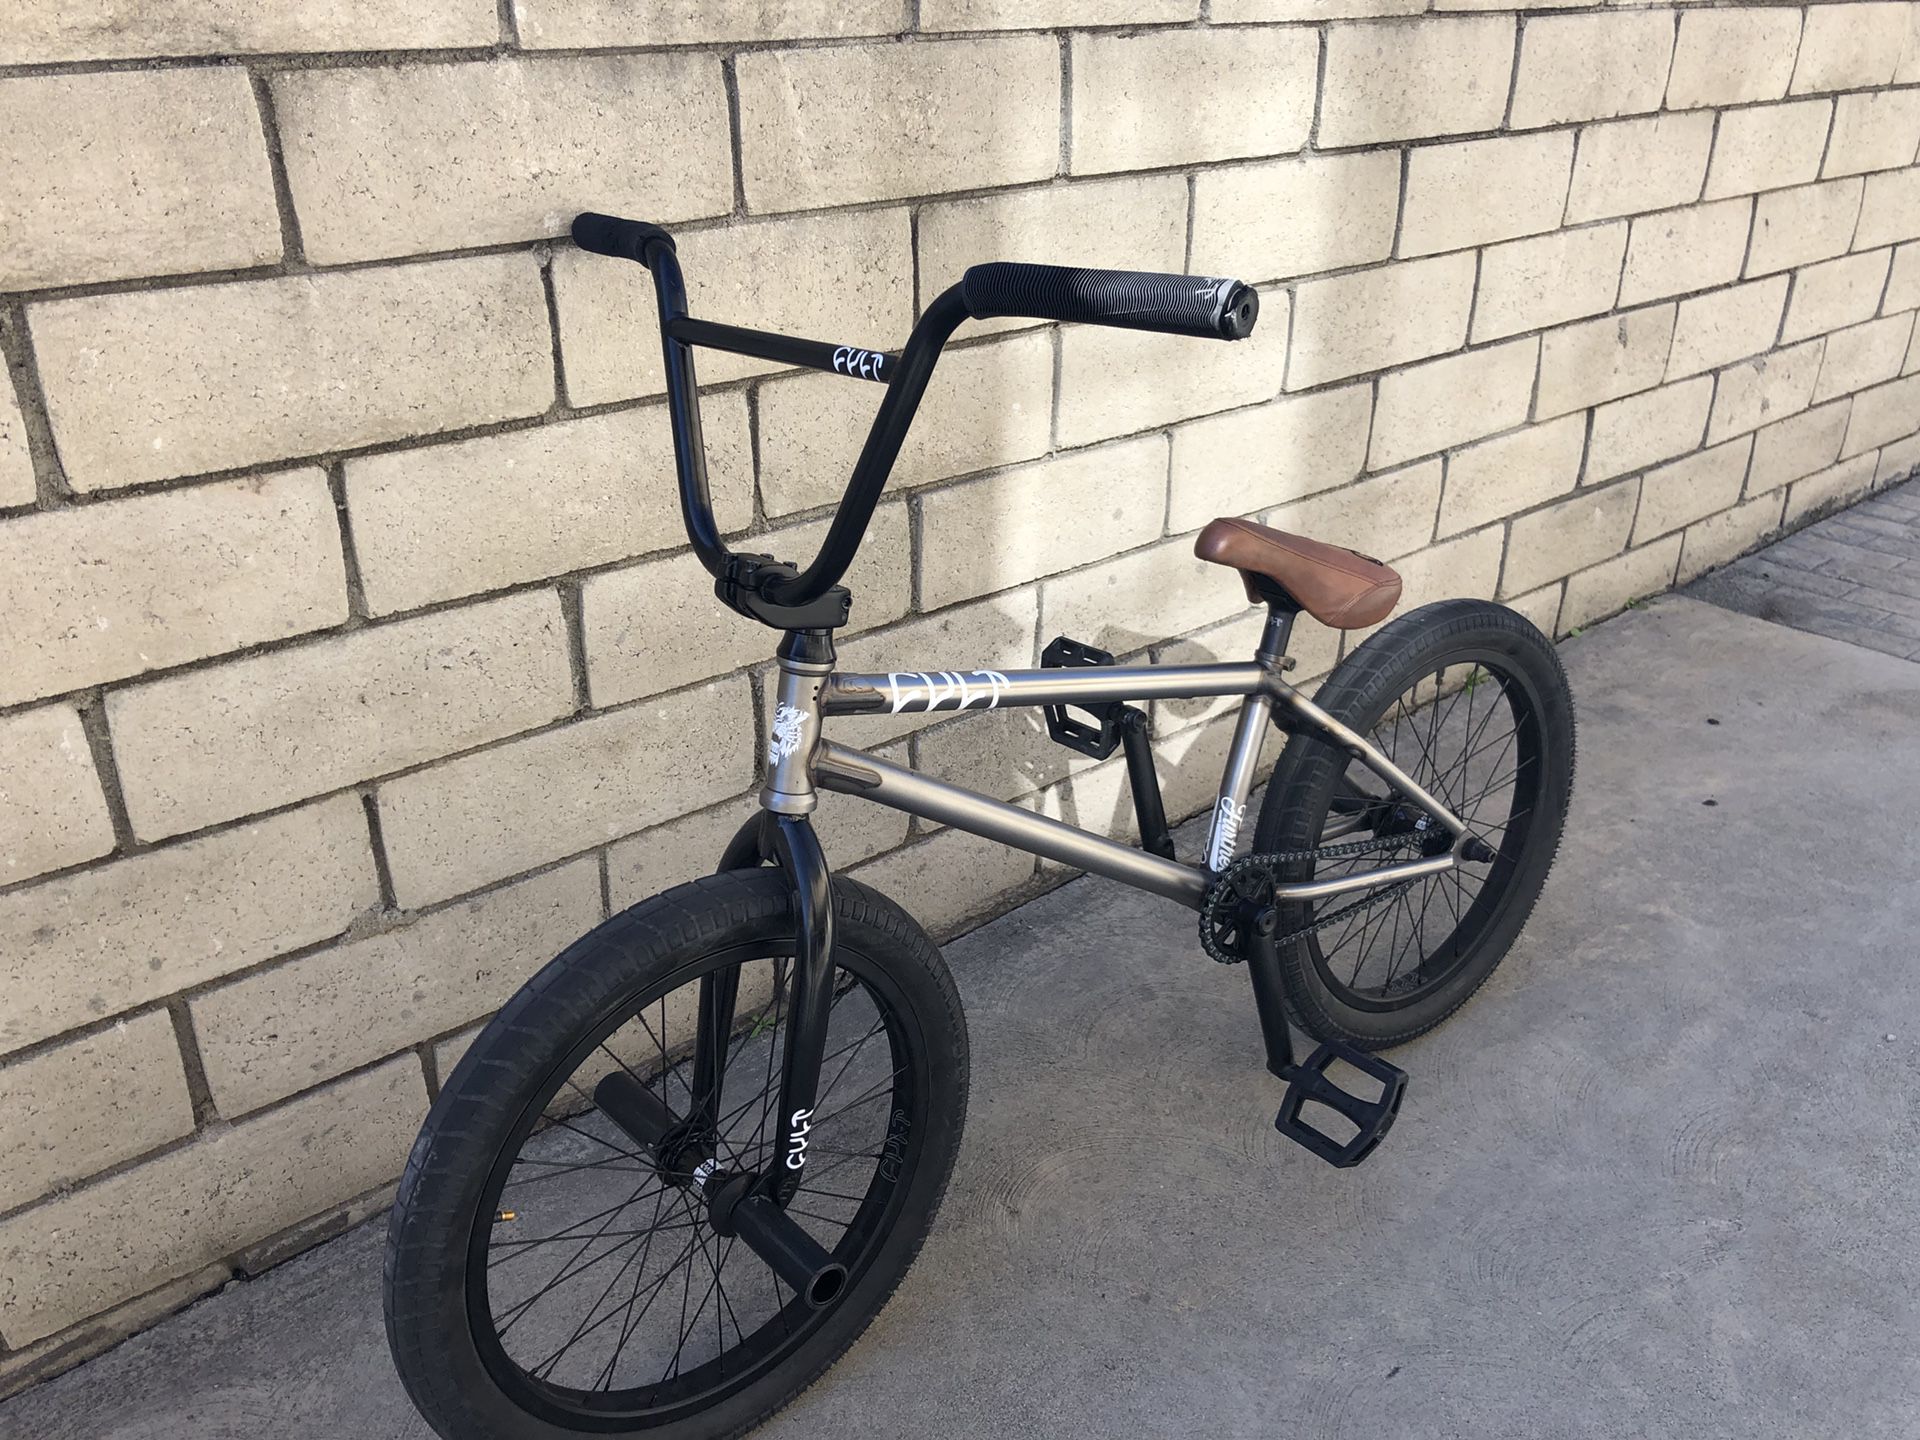 Full custom Cult BMX Bike $1300 value for Sale in Arcadia, CA 